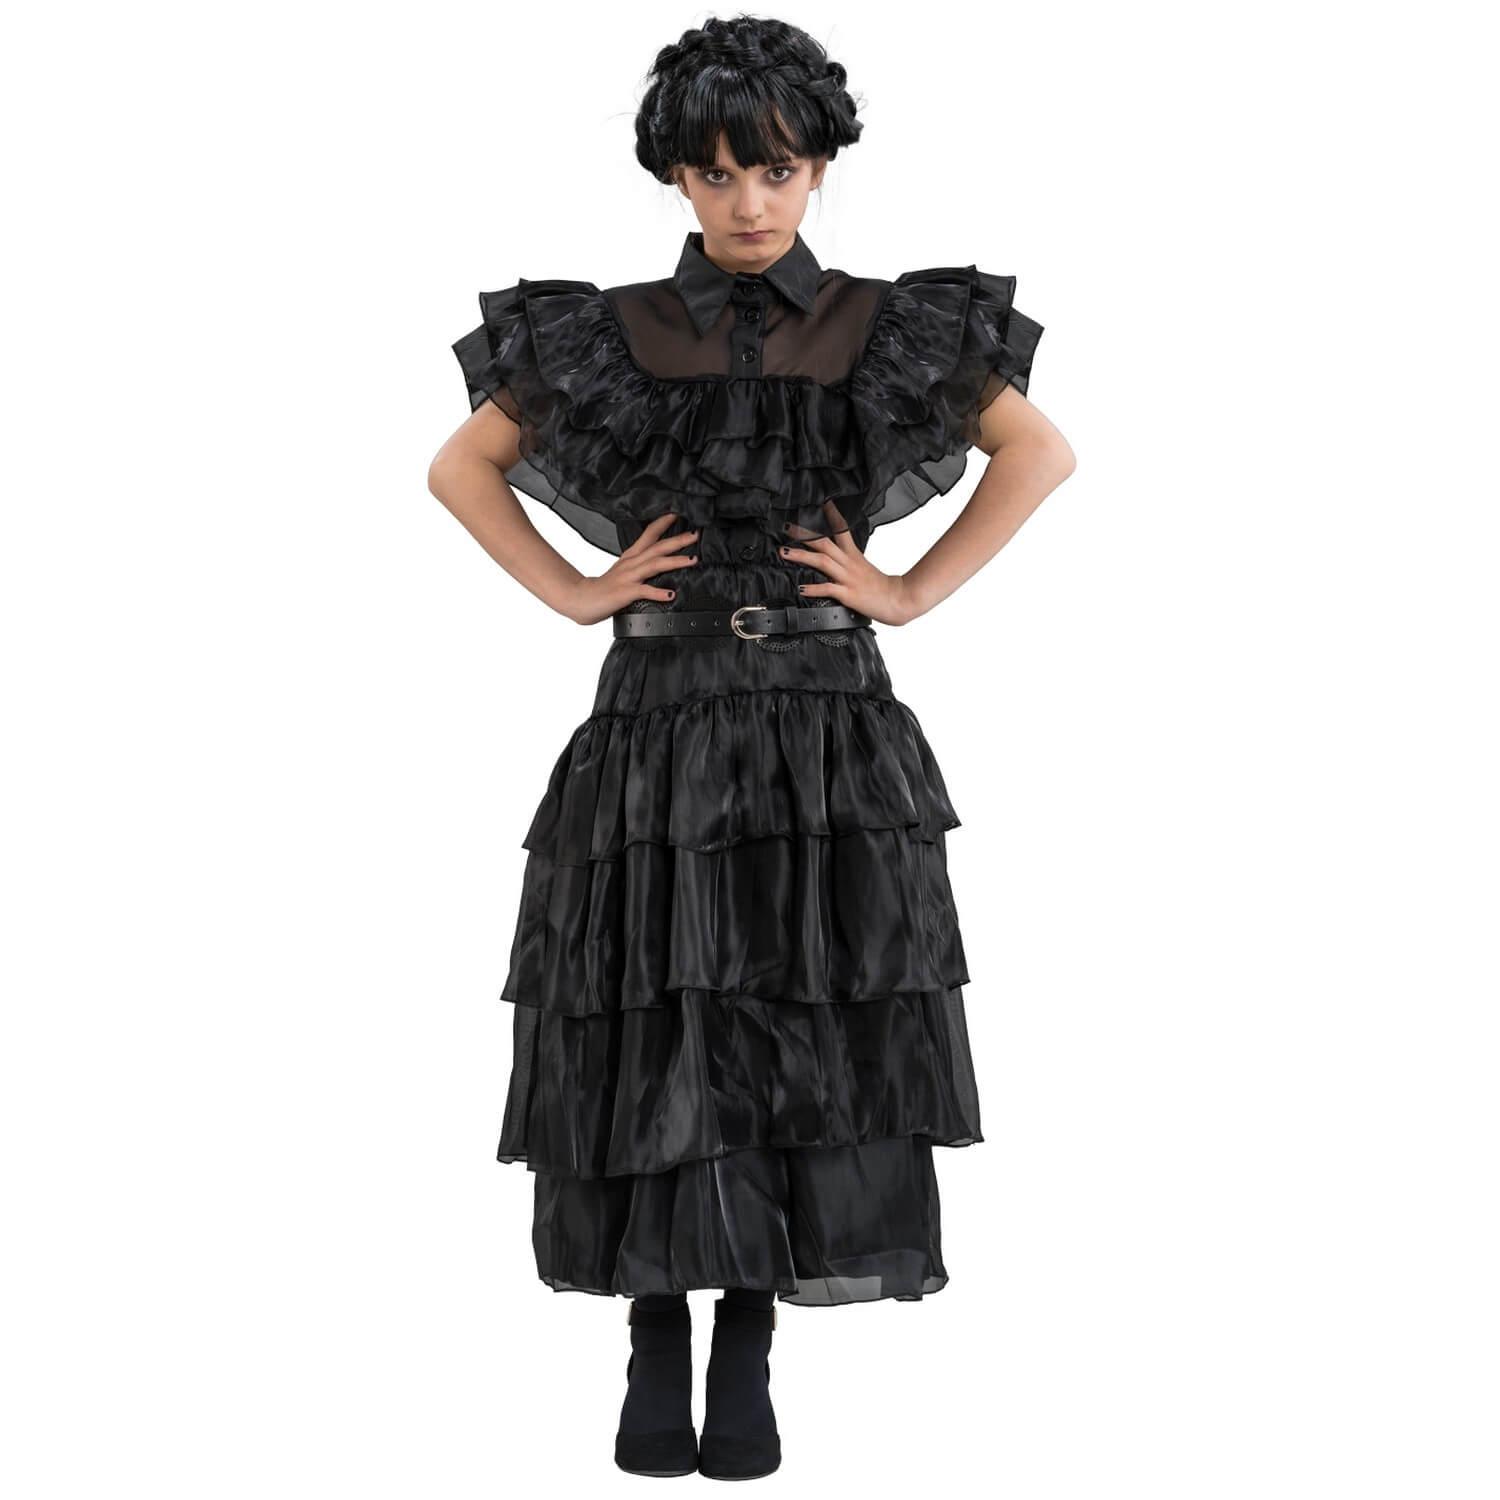 Mercredi Addams Costume Pour Femmes Filles Col Robe Noire Costume Z